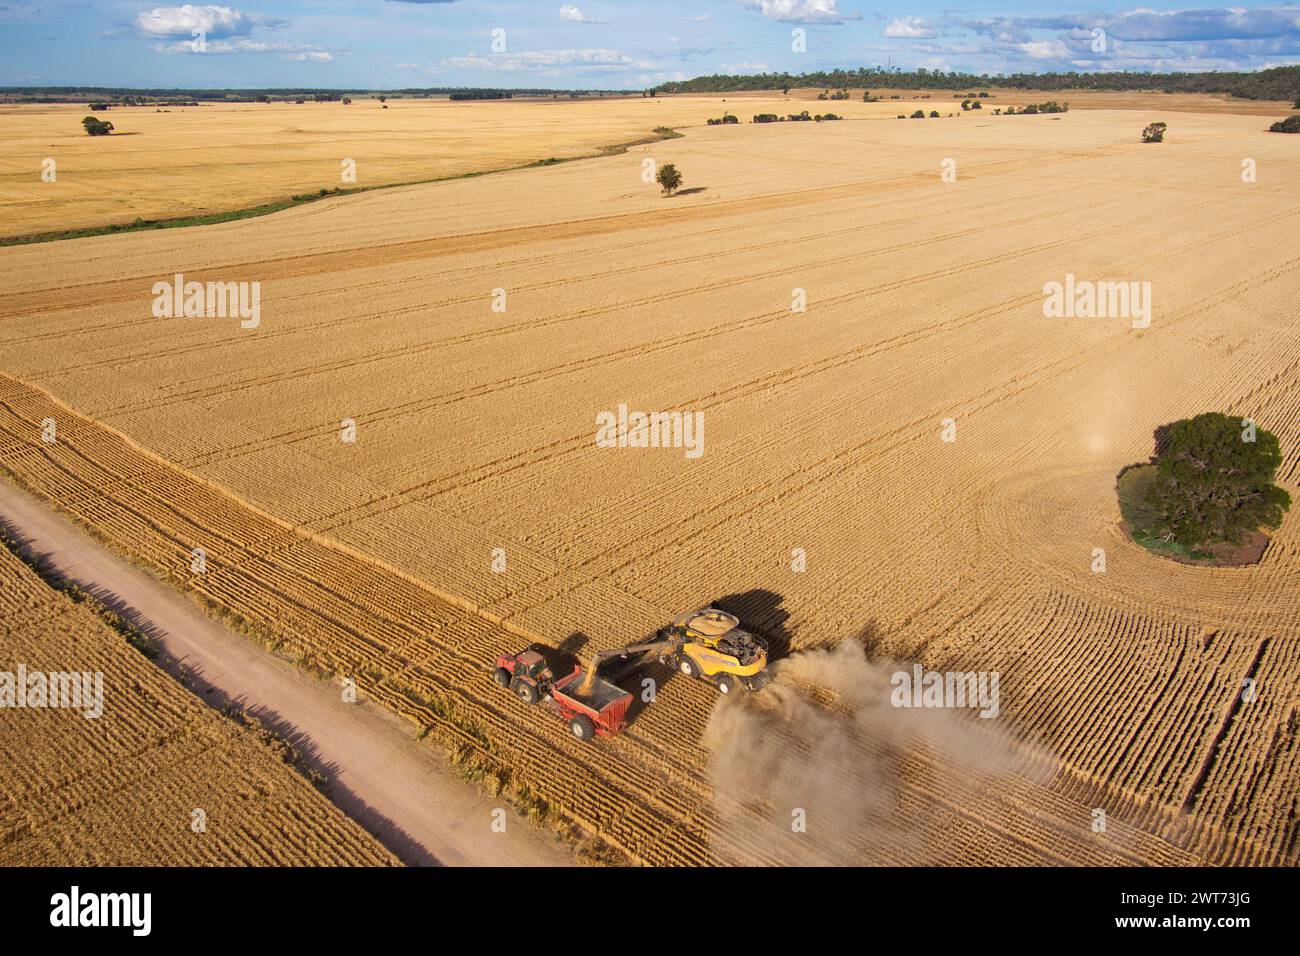 Aerial of combine harvester wheat harvesting near Wallumbilla on the Maranoa Queensland Australia Stock Photo